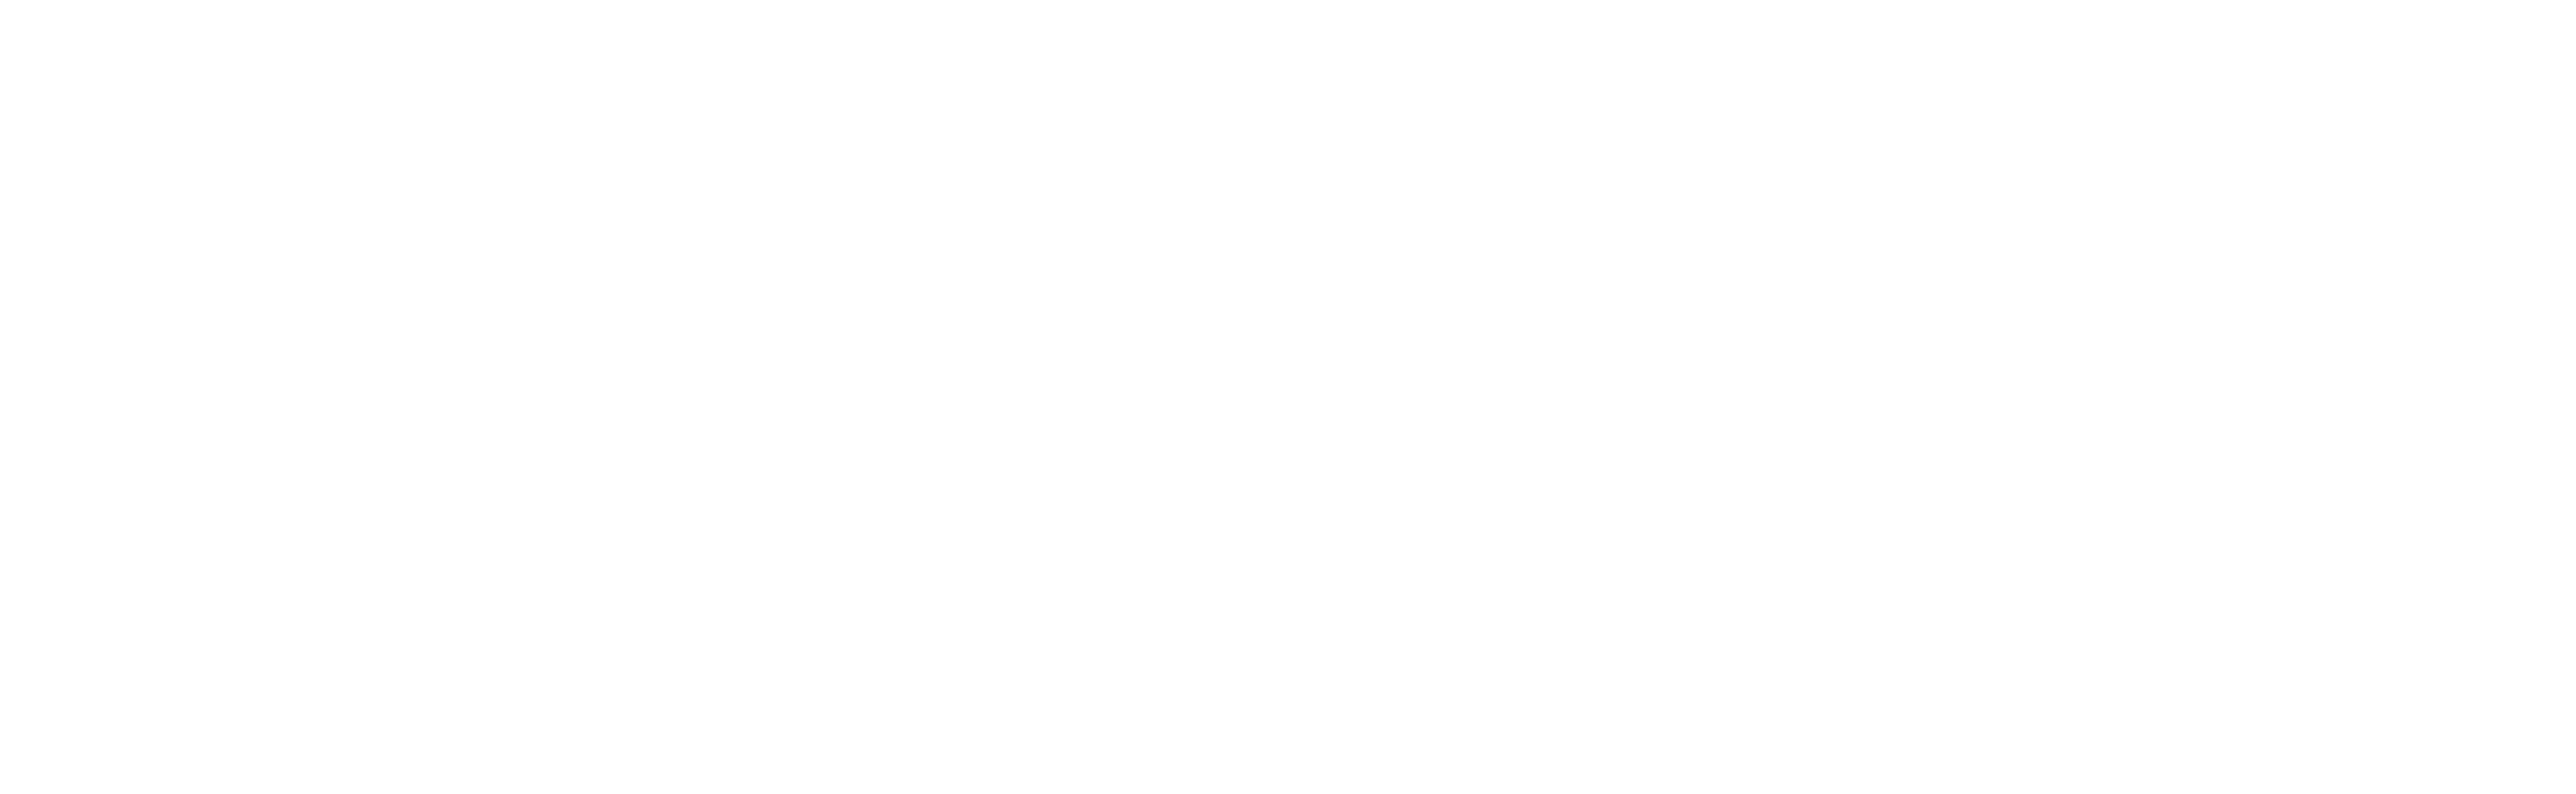 Tom Clancy's Jack Ryan logo